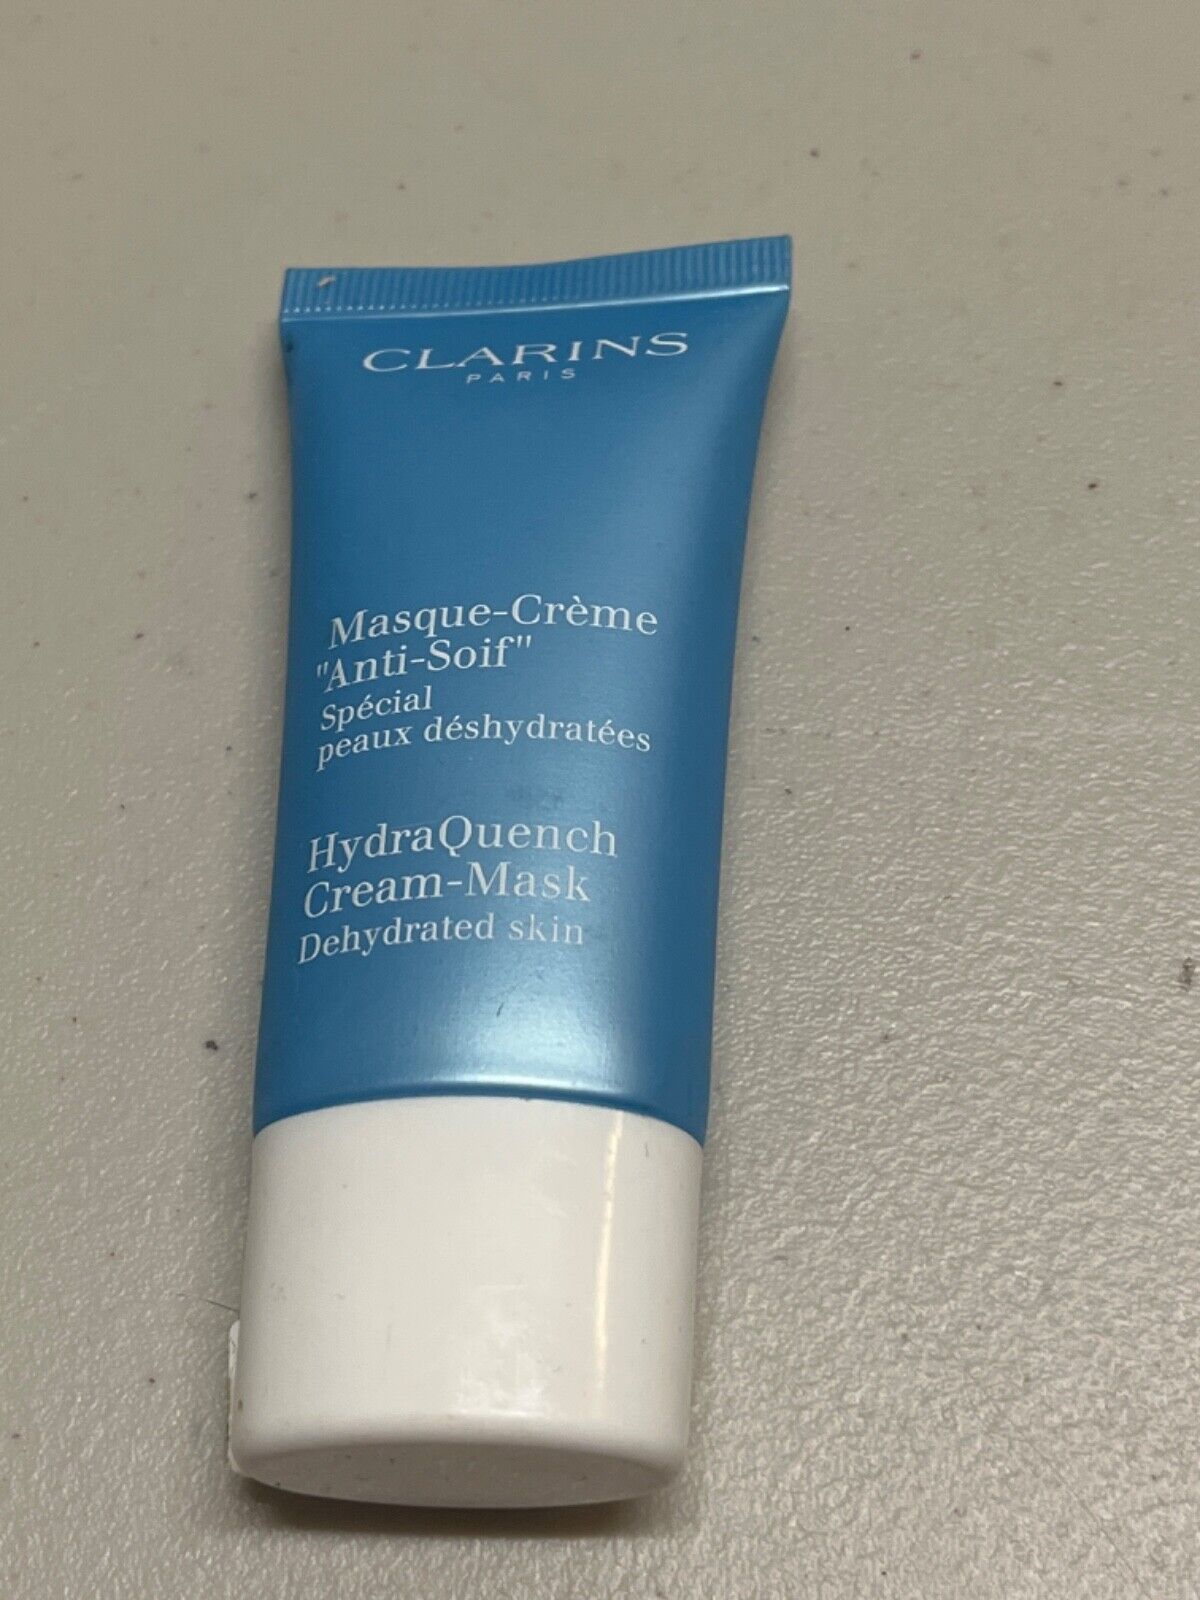 Clarins Paris HydraQuench Cream-Mask 1 oz